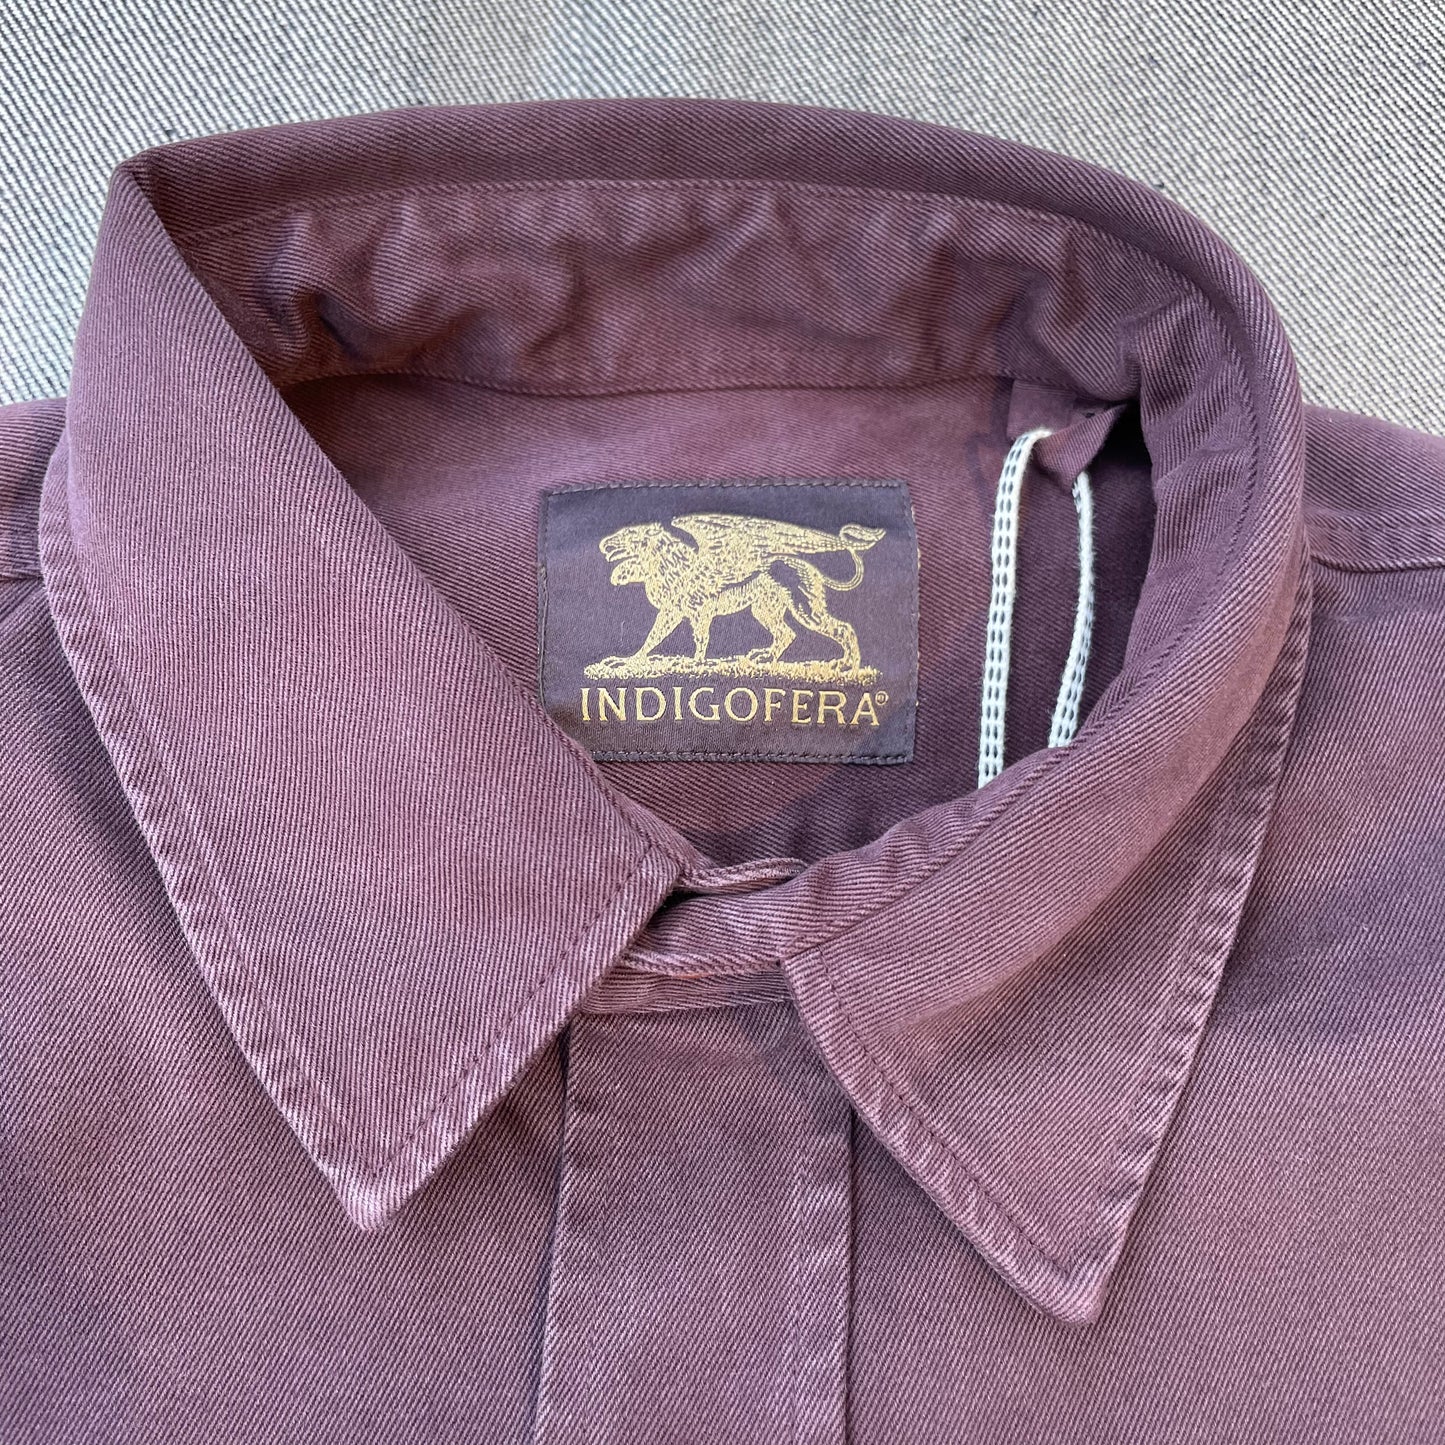 Indigofera - Alamo Crimson Dusk Twill Shirt